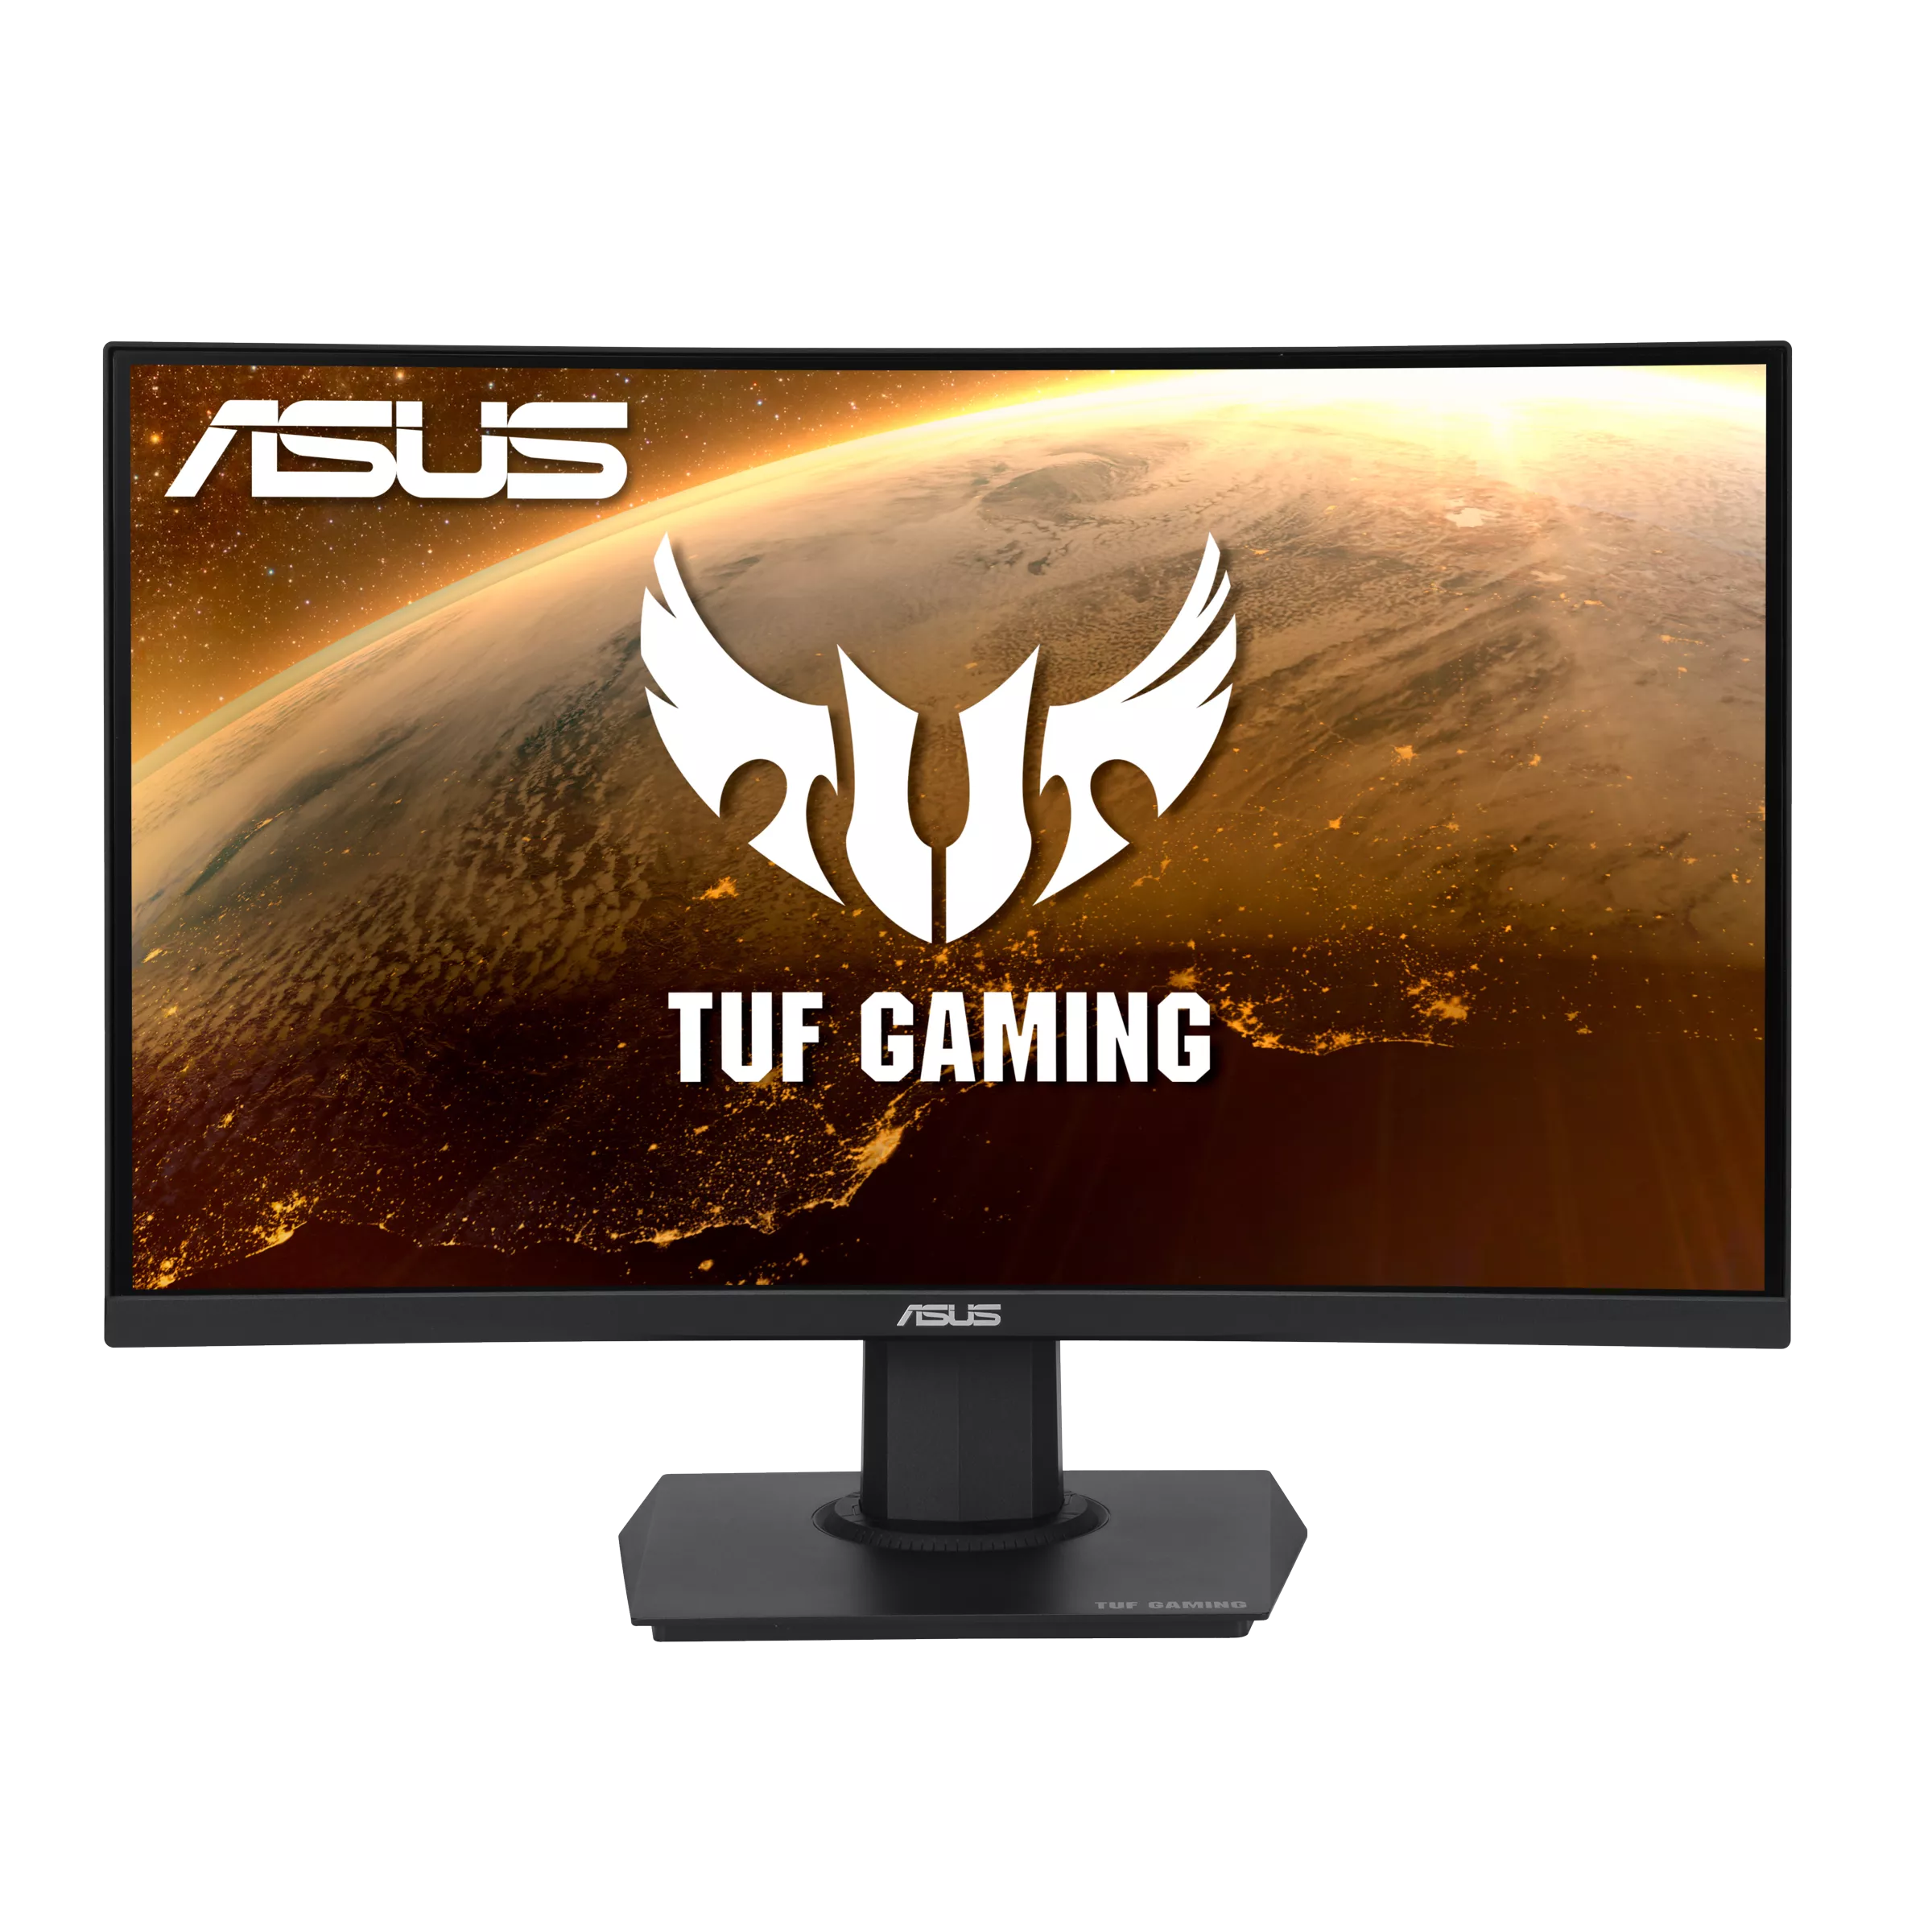 Asus TUF Gaming VG24VQE Flat Front View